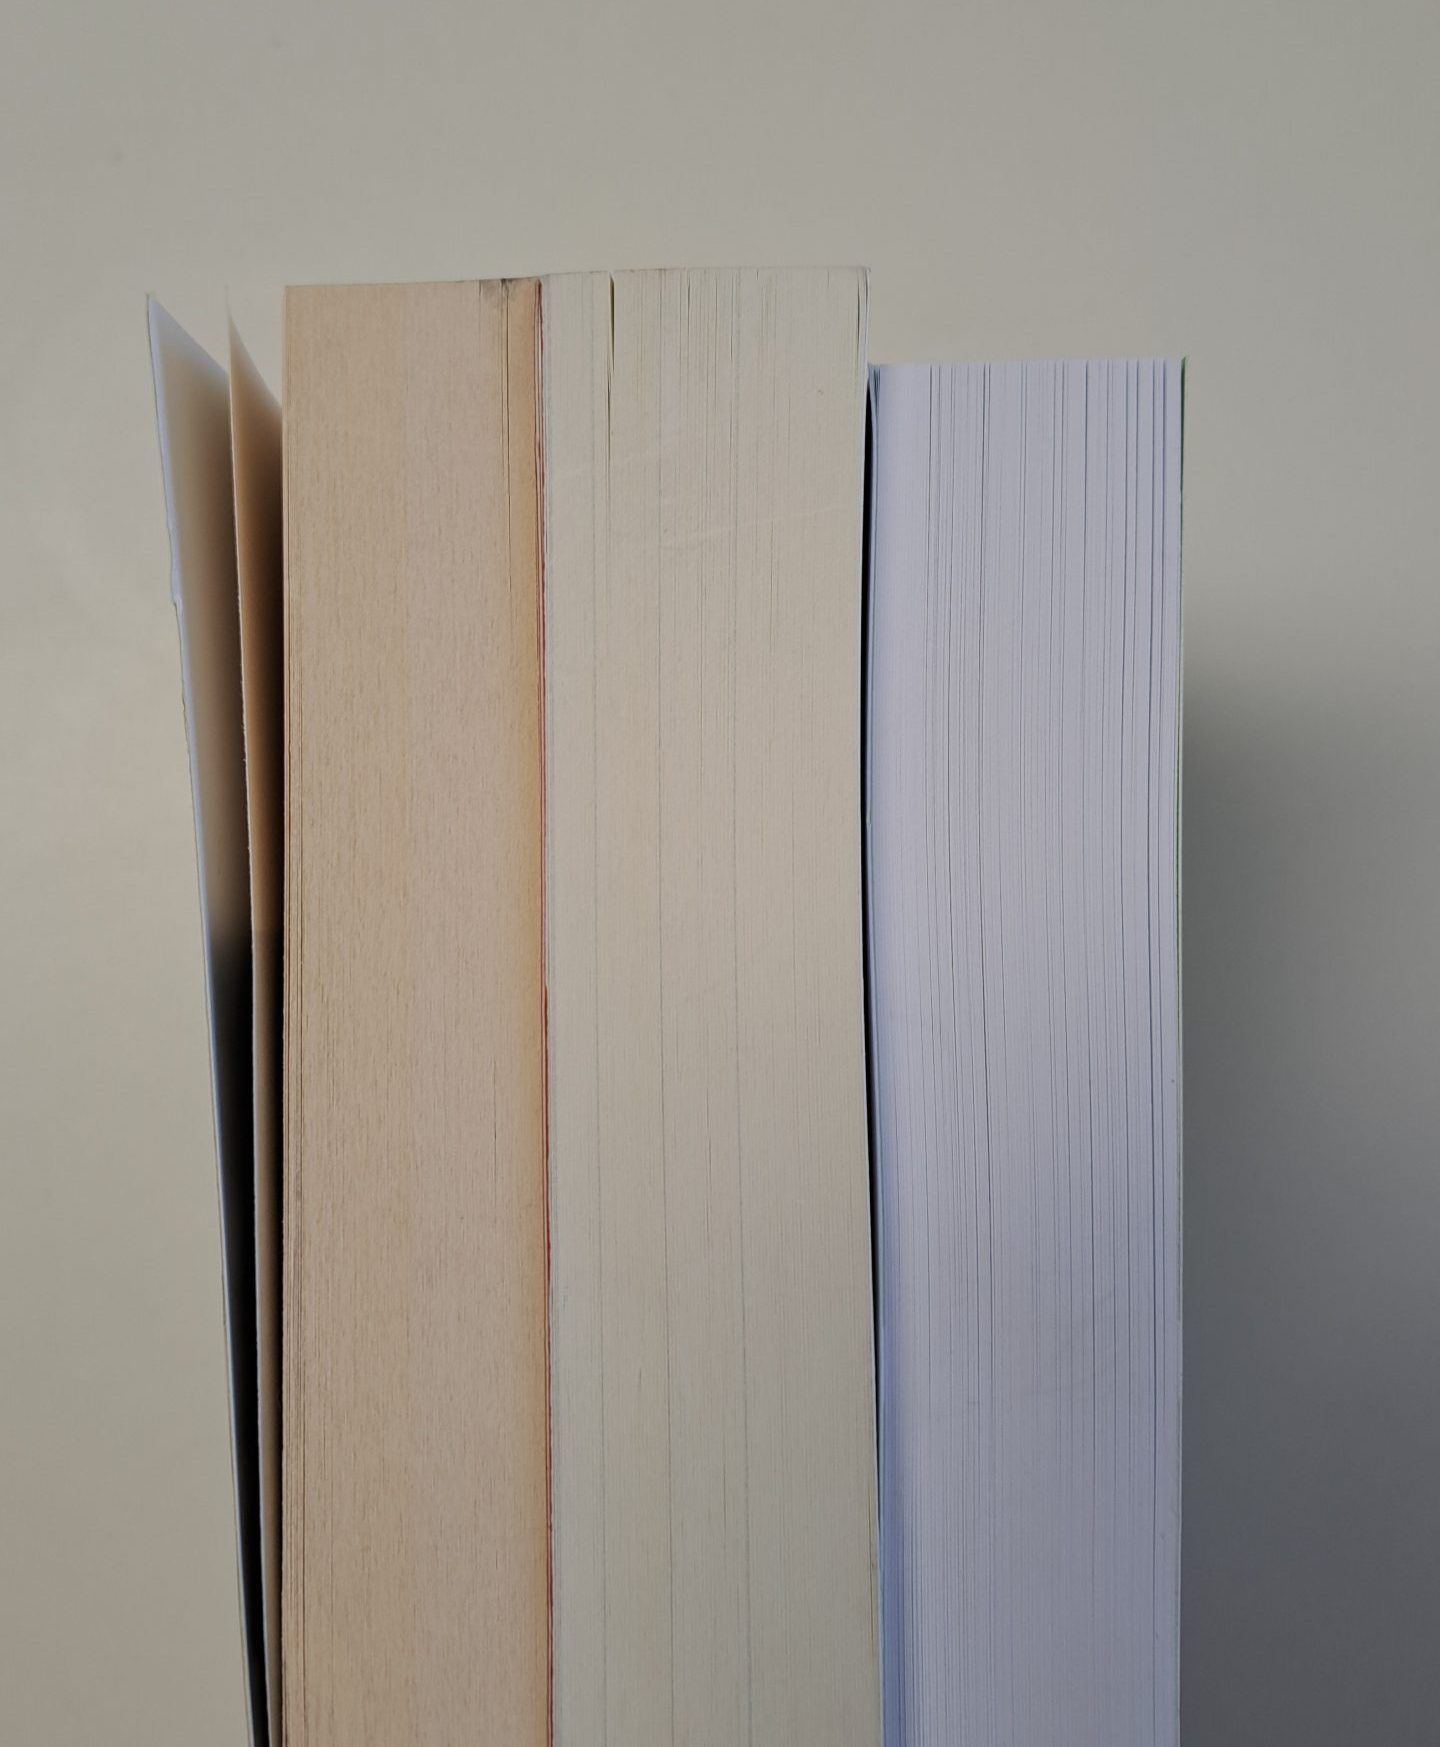 Groundwood, cream, and white paper comparison